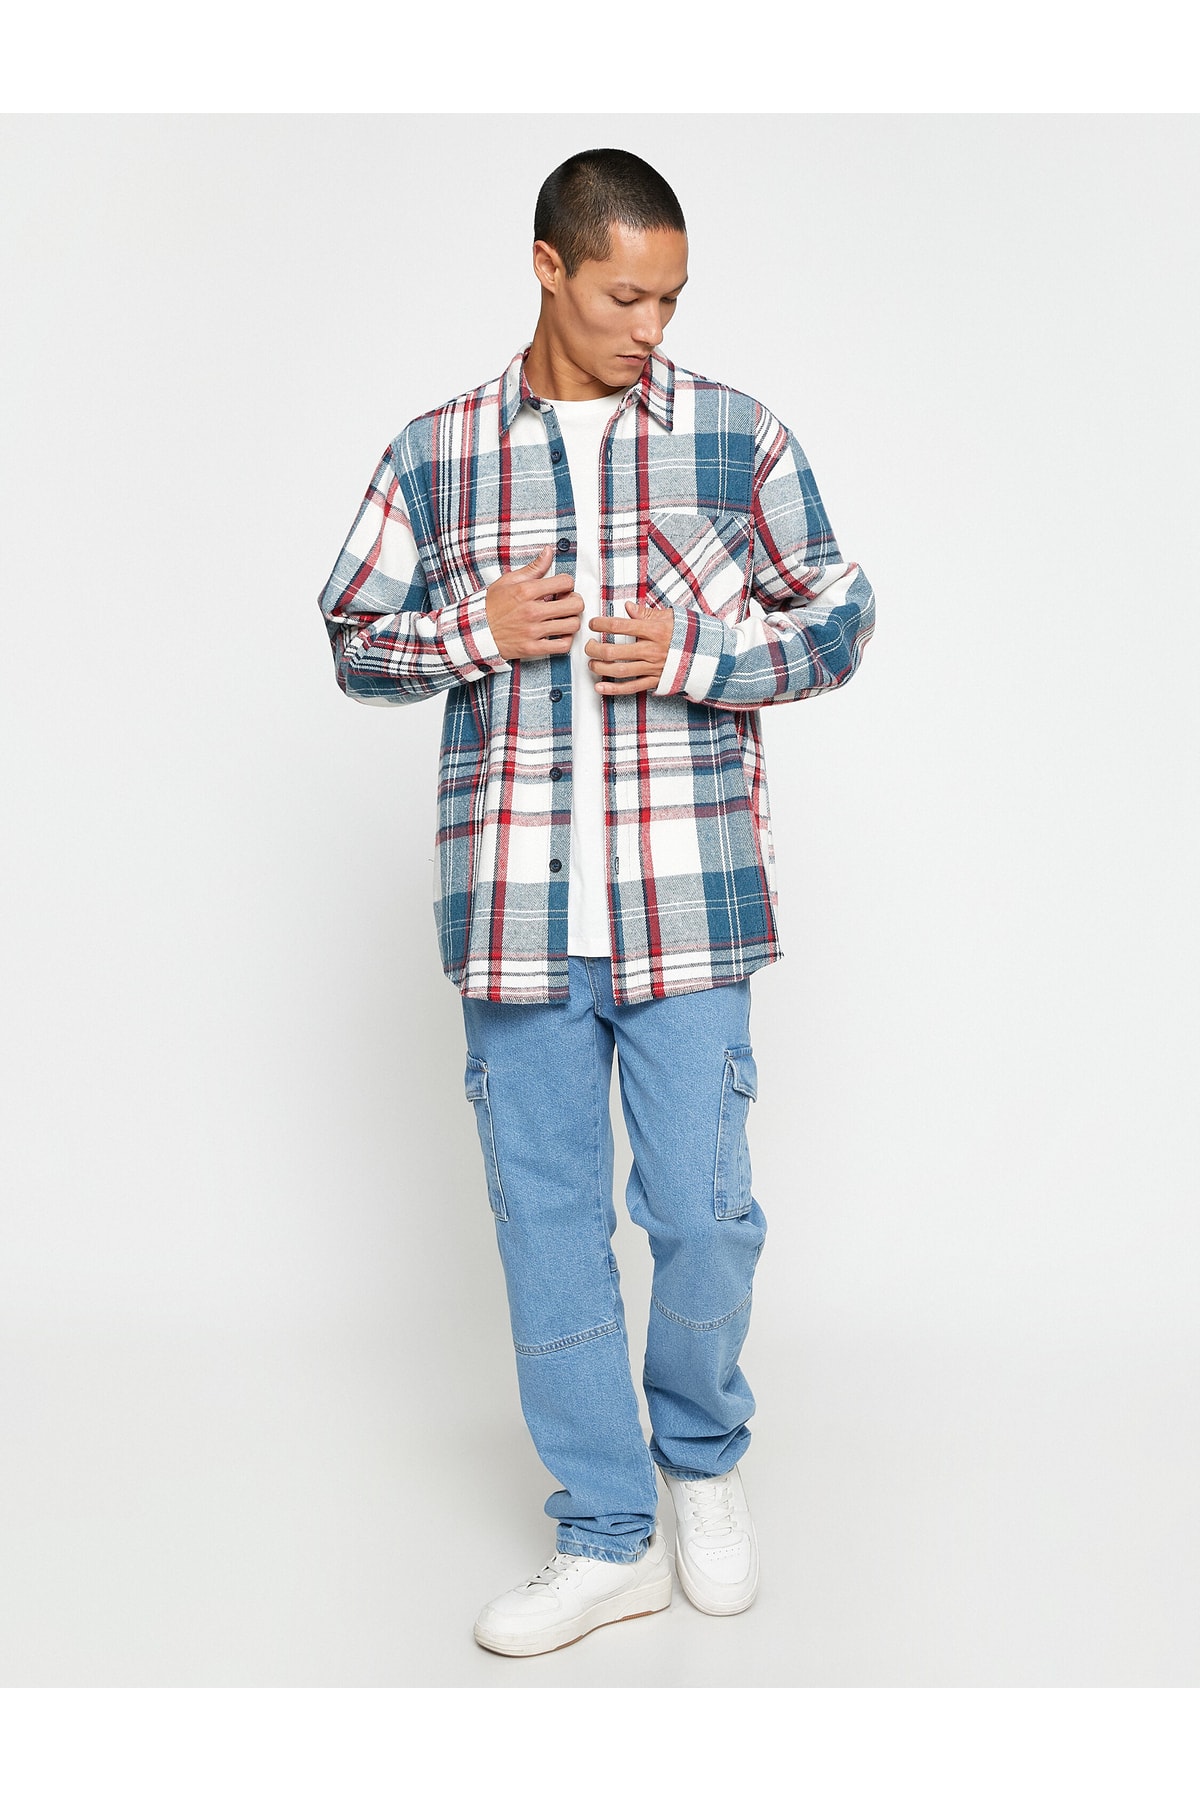 Koton Plaid Lumberjack Shirt Classic Collar Pocket Detailed Long Sleeve